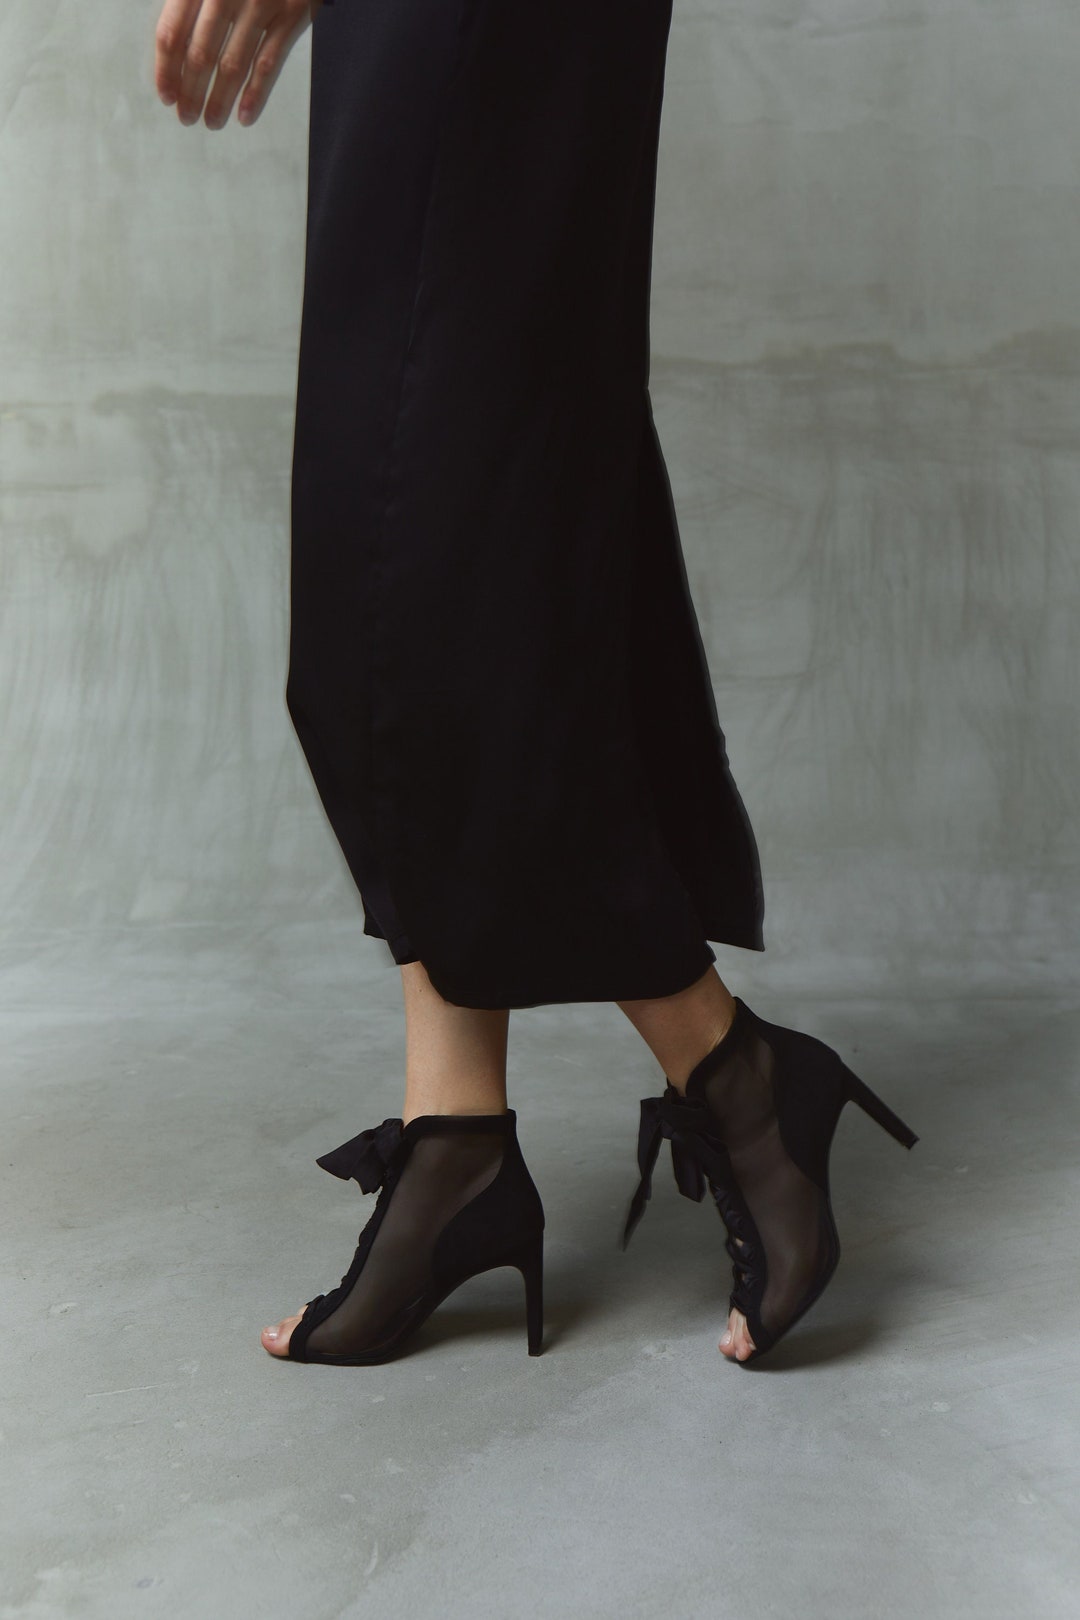 Black Mesh Shoes With High Block Heels Fishnet Black Ankle - Etsy